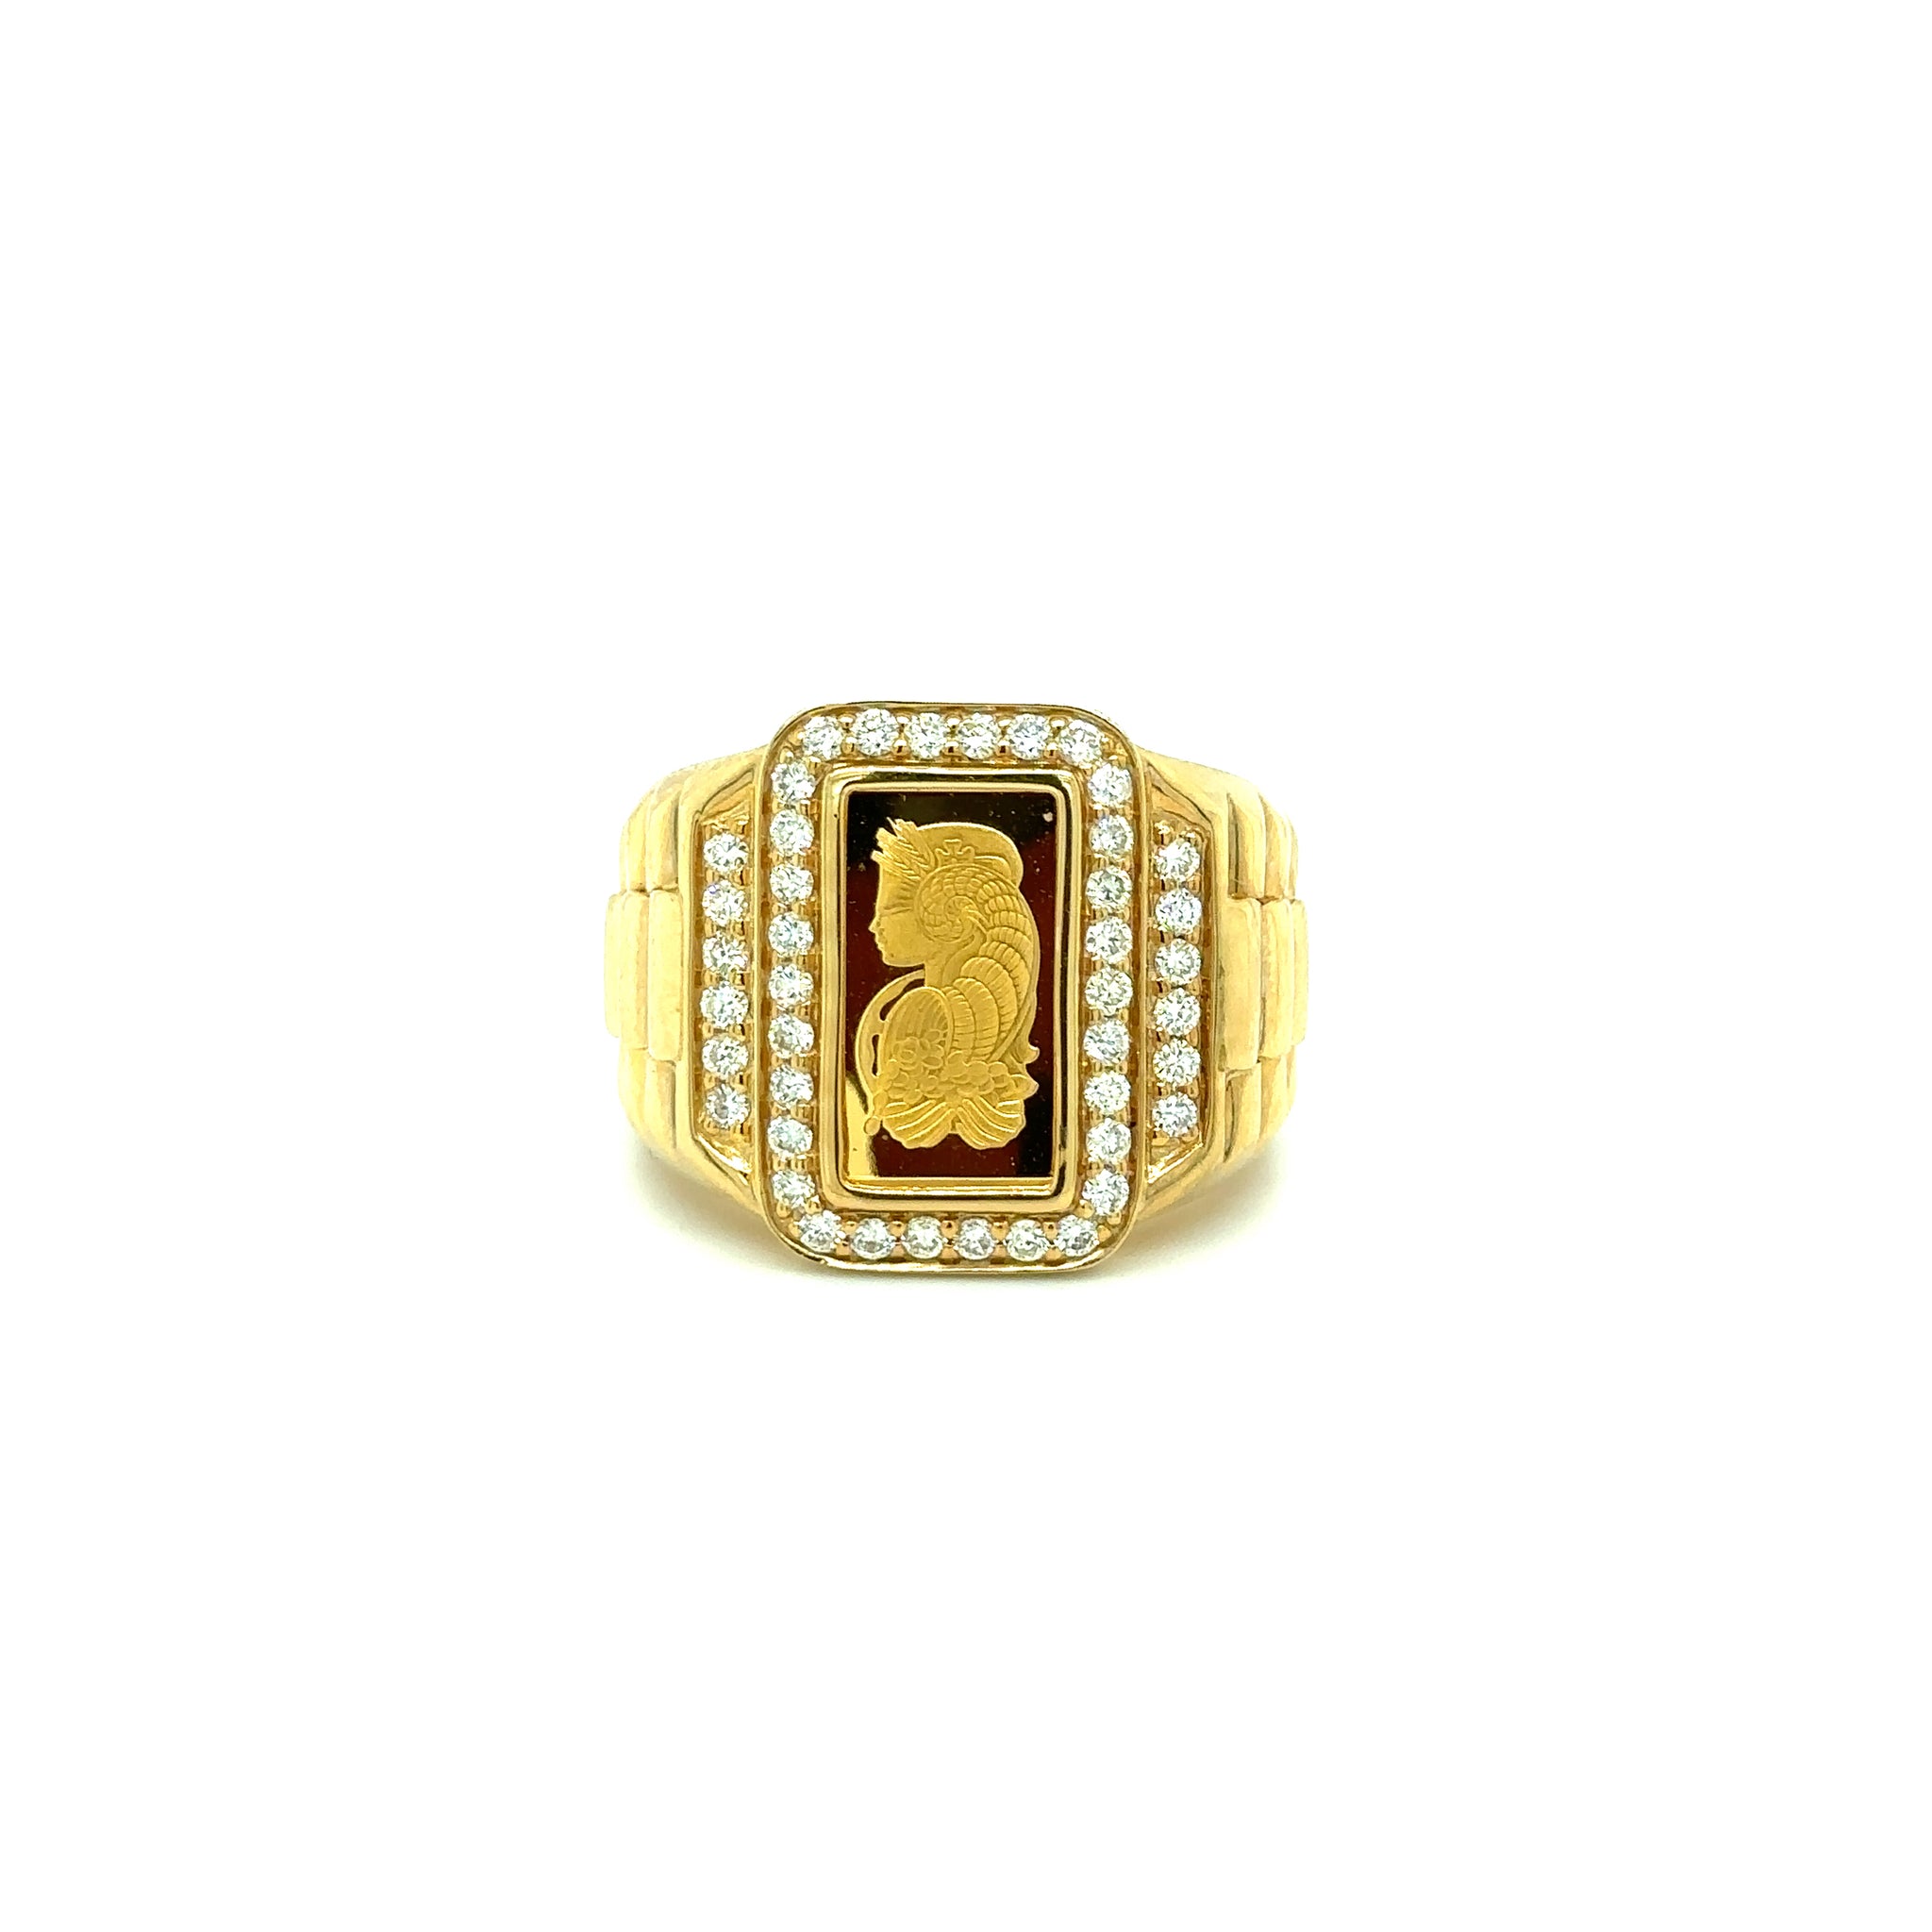 Buy 24k Gold Band 24k Diamond Ring 24K Ring Diamond Ring Handmade Wedding  Ring Brown Diamond Ring Hammered Gold Rustic Gold Ring Online in India -  Etsy